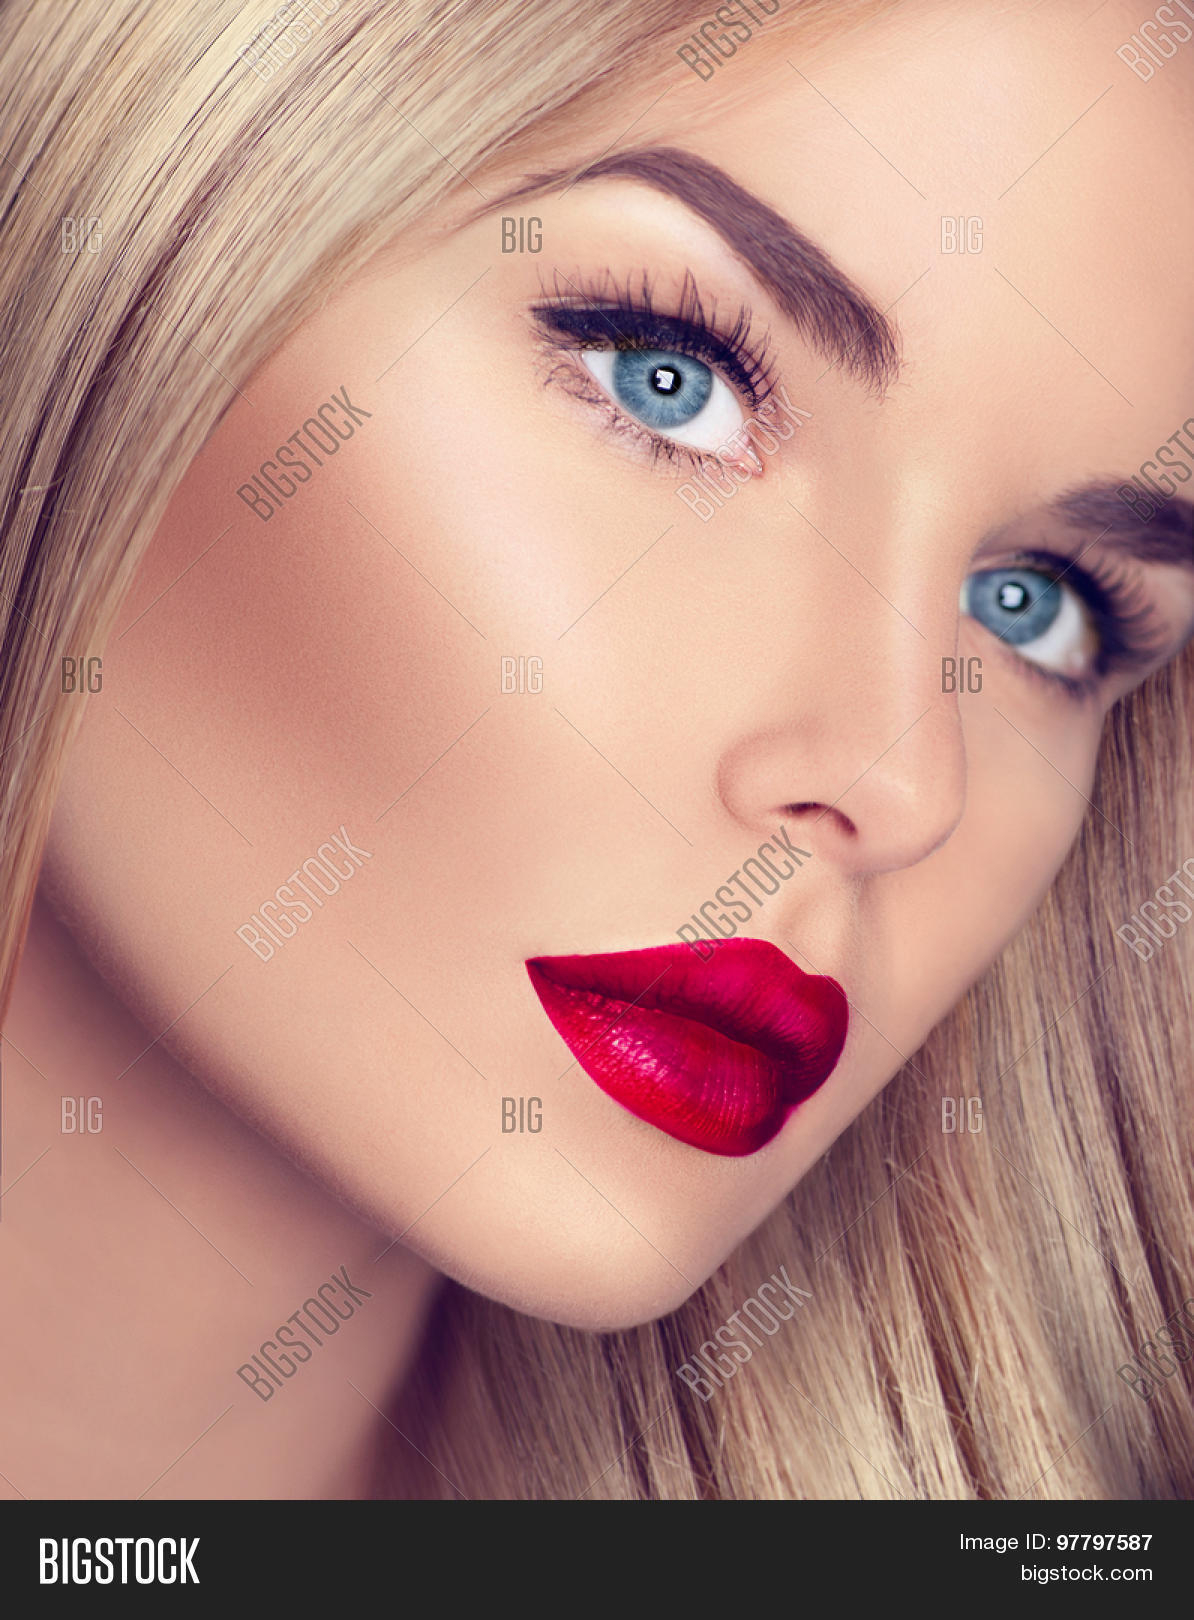 Eye Makeup For Blondes Beautiful Blonde Girl Image Photo Free Trial Bigstock